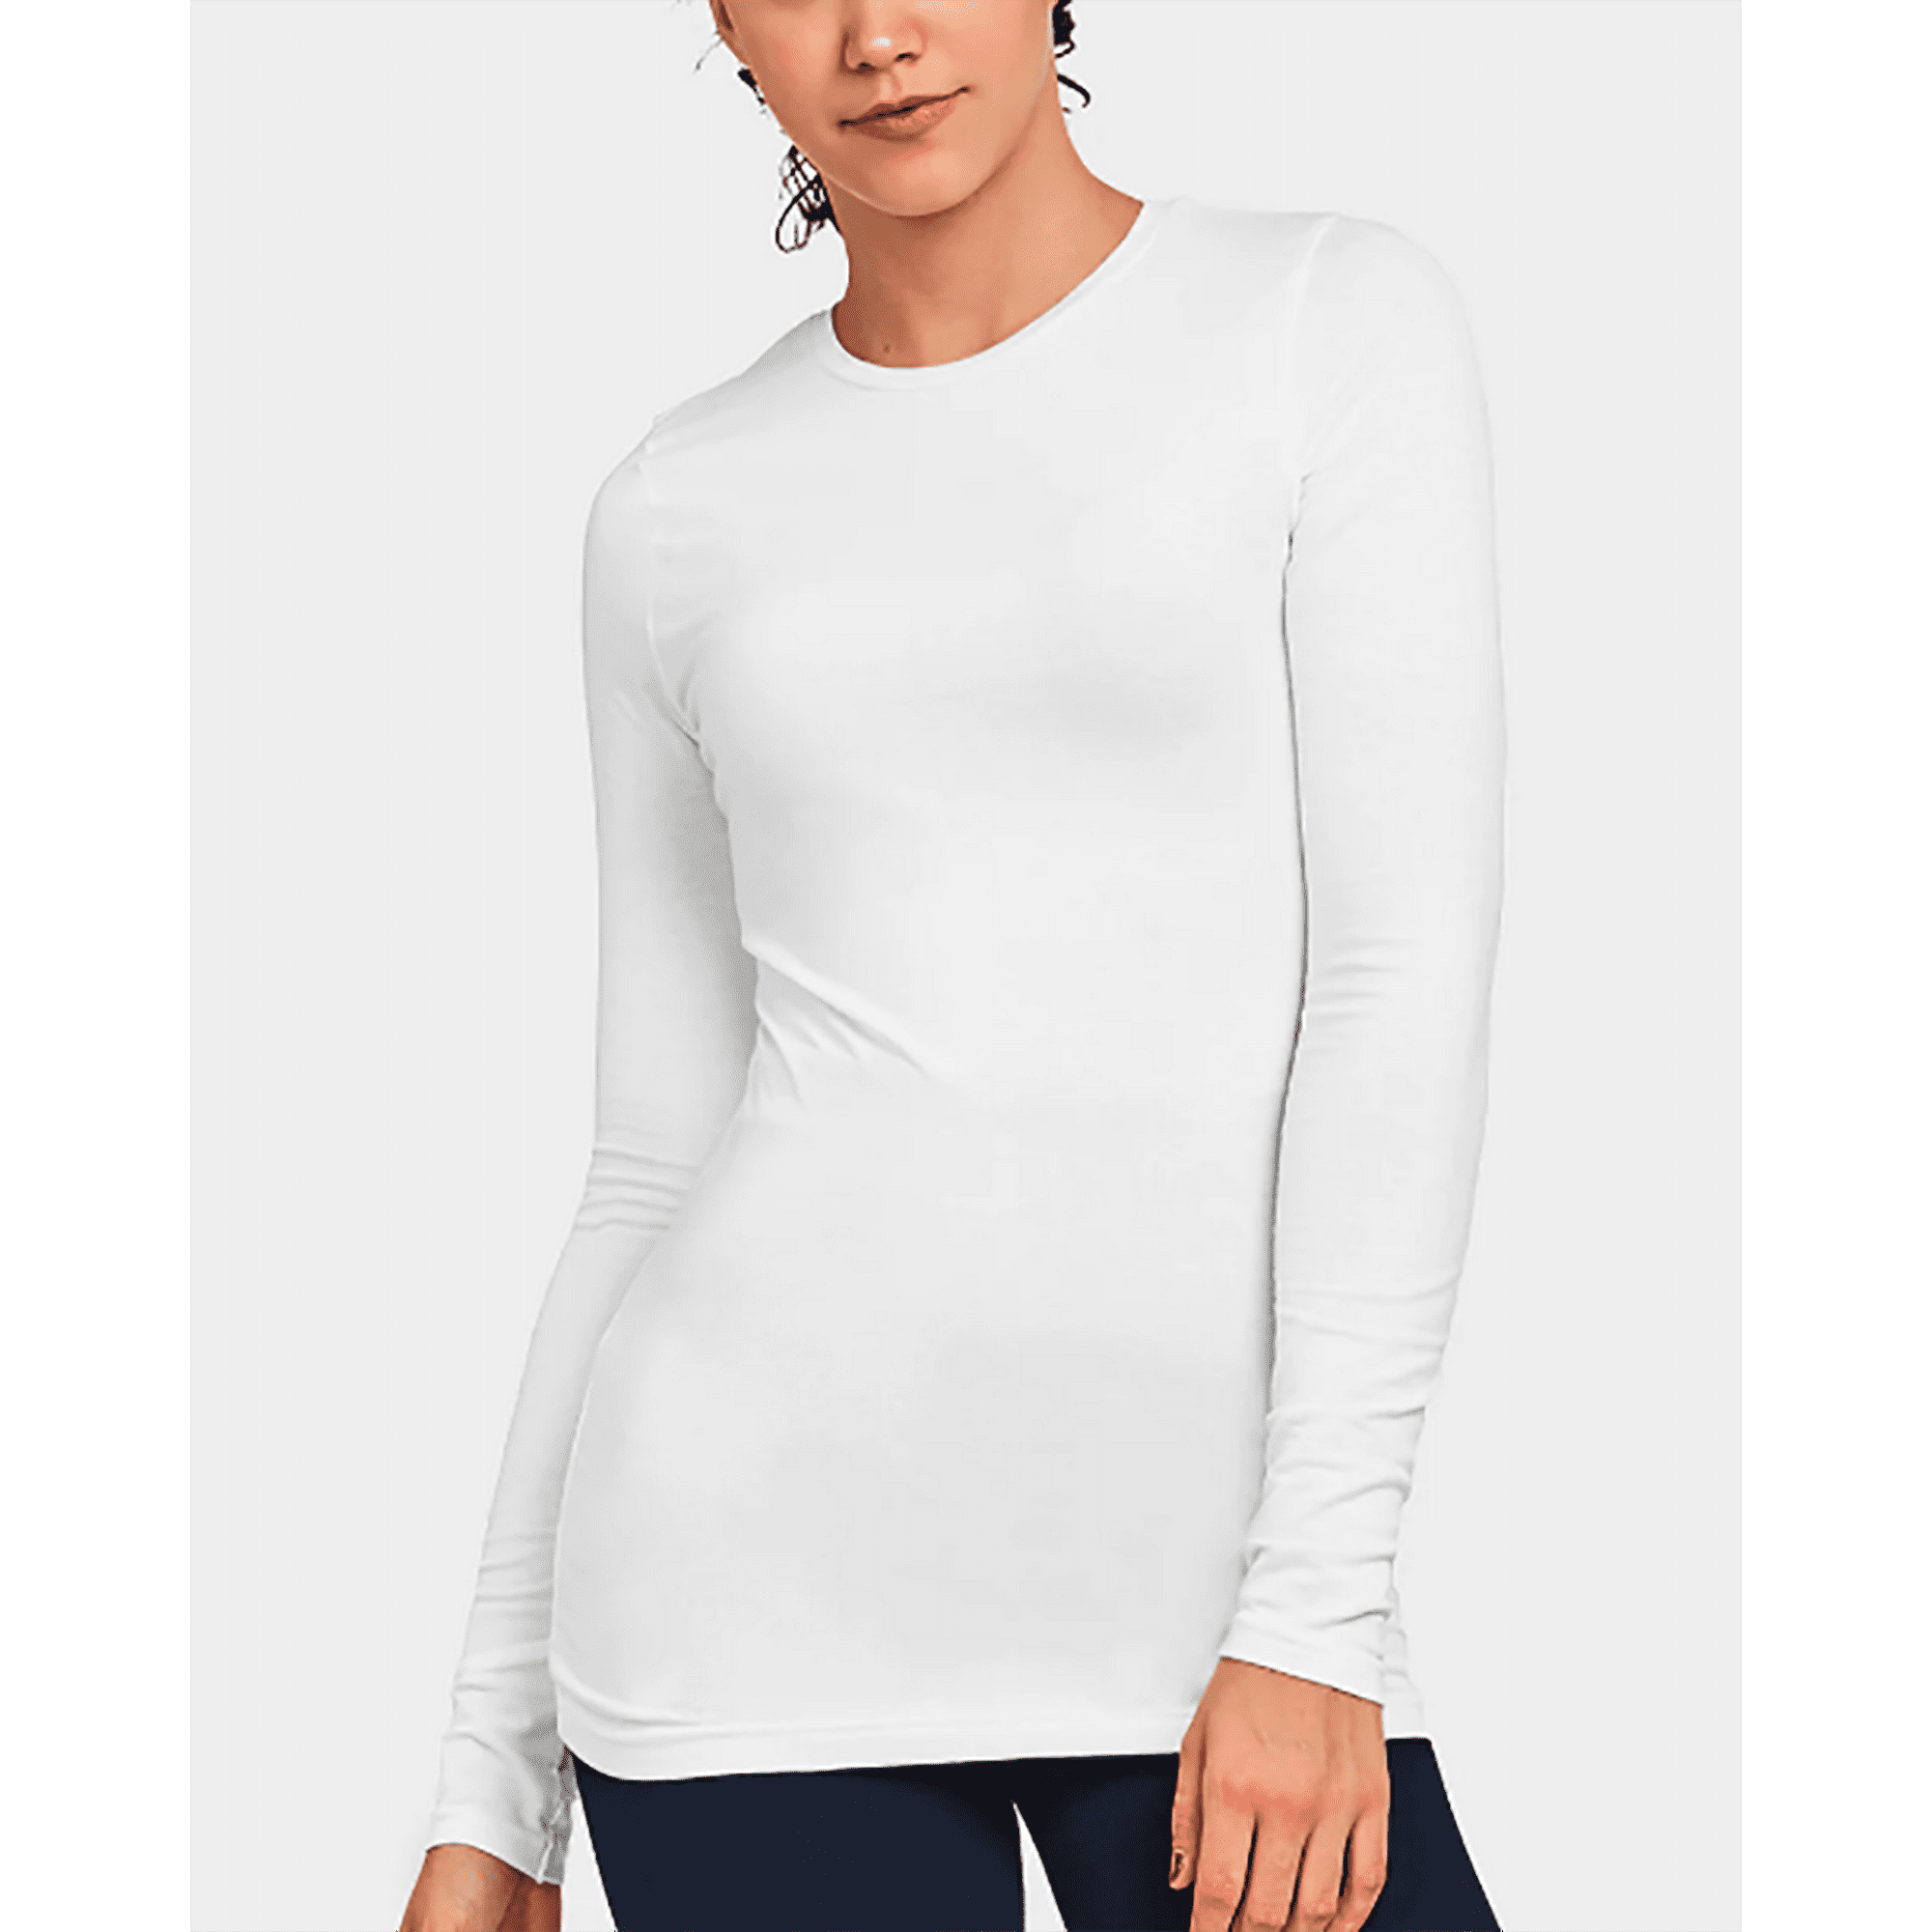 dis identifikation peeling Women's Crew Neck Long Sleeve Cotton T-Shirt Soft Stretchy Tee Slim Fit Top  (Large, White) - Walmart.com